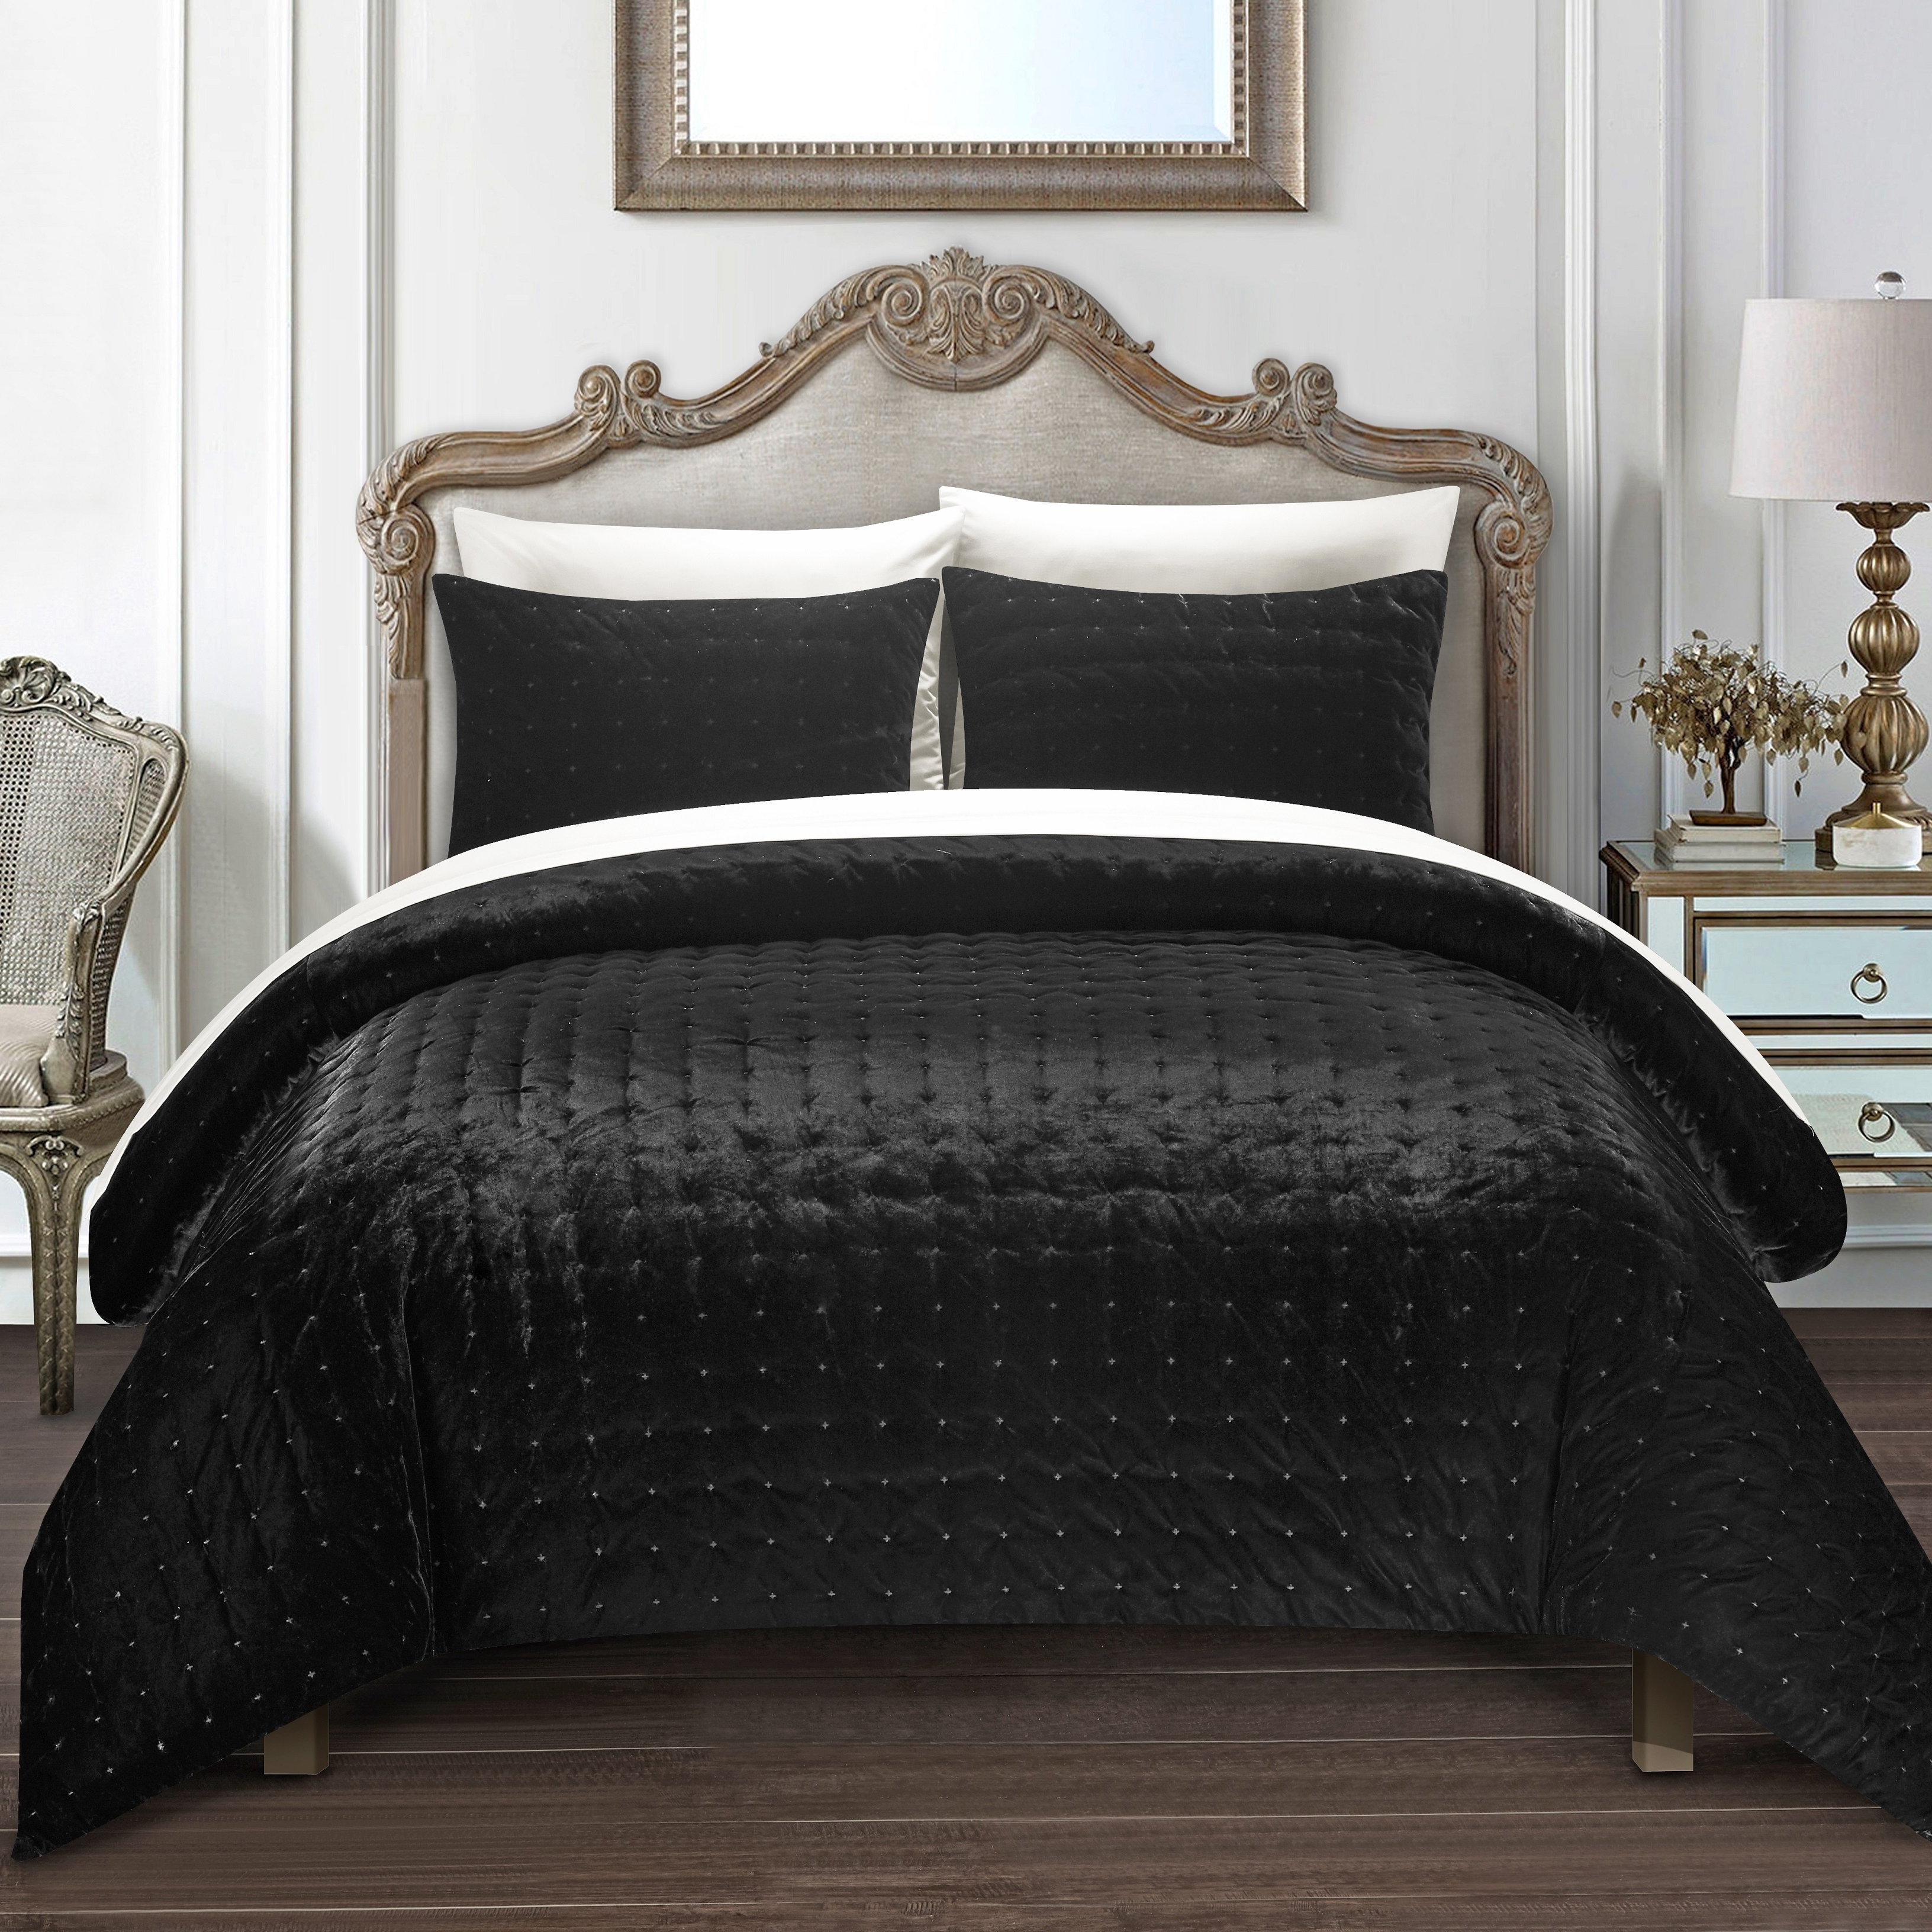 Chyna 3 Piece Comforter Set Luxurious Velvet Bedding - Burgundy, Queen